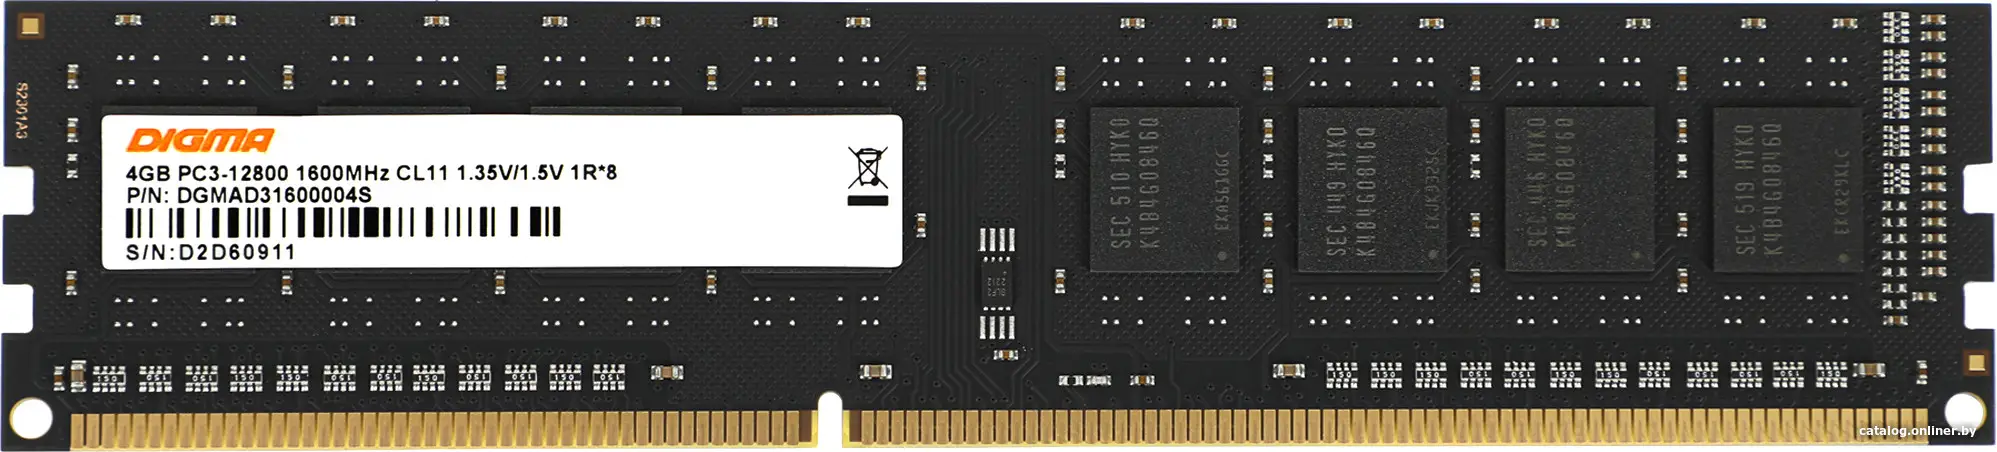 Купить Оперативная память Digma 4Gb DDR3L RTL (DGMAD31600004S), цена, опт и розница